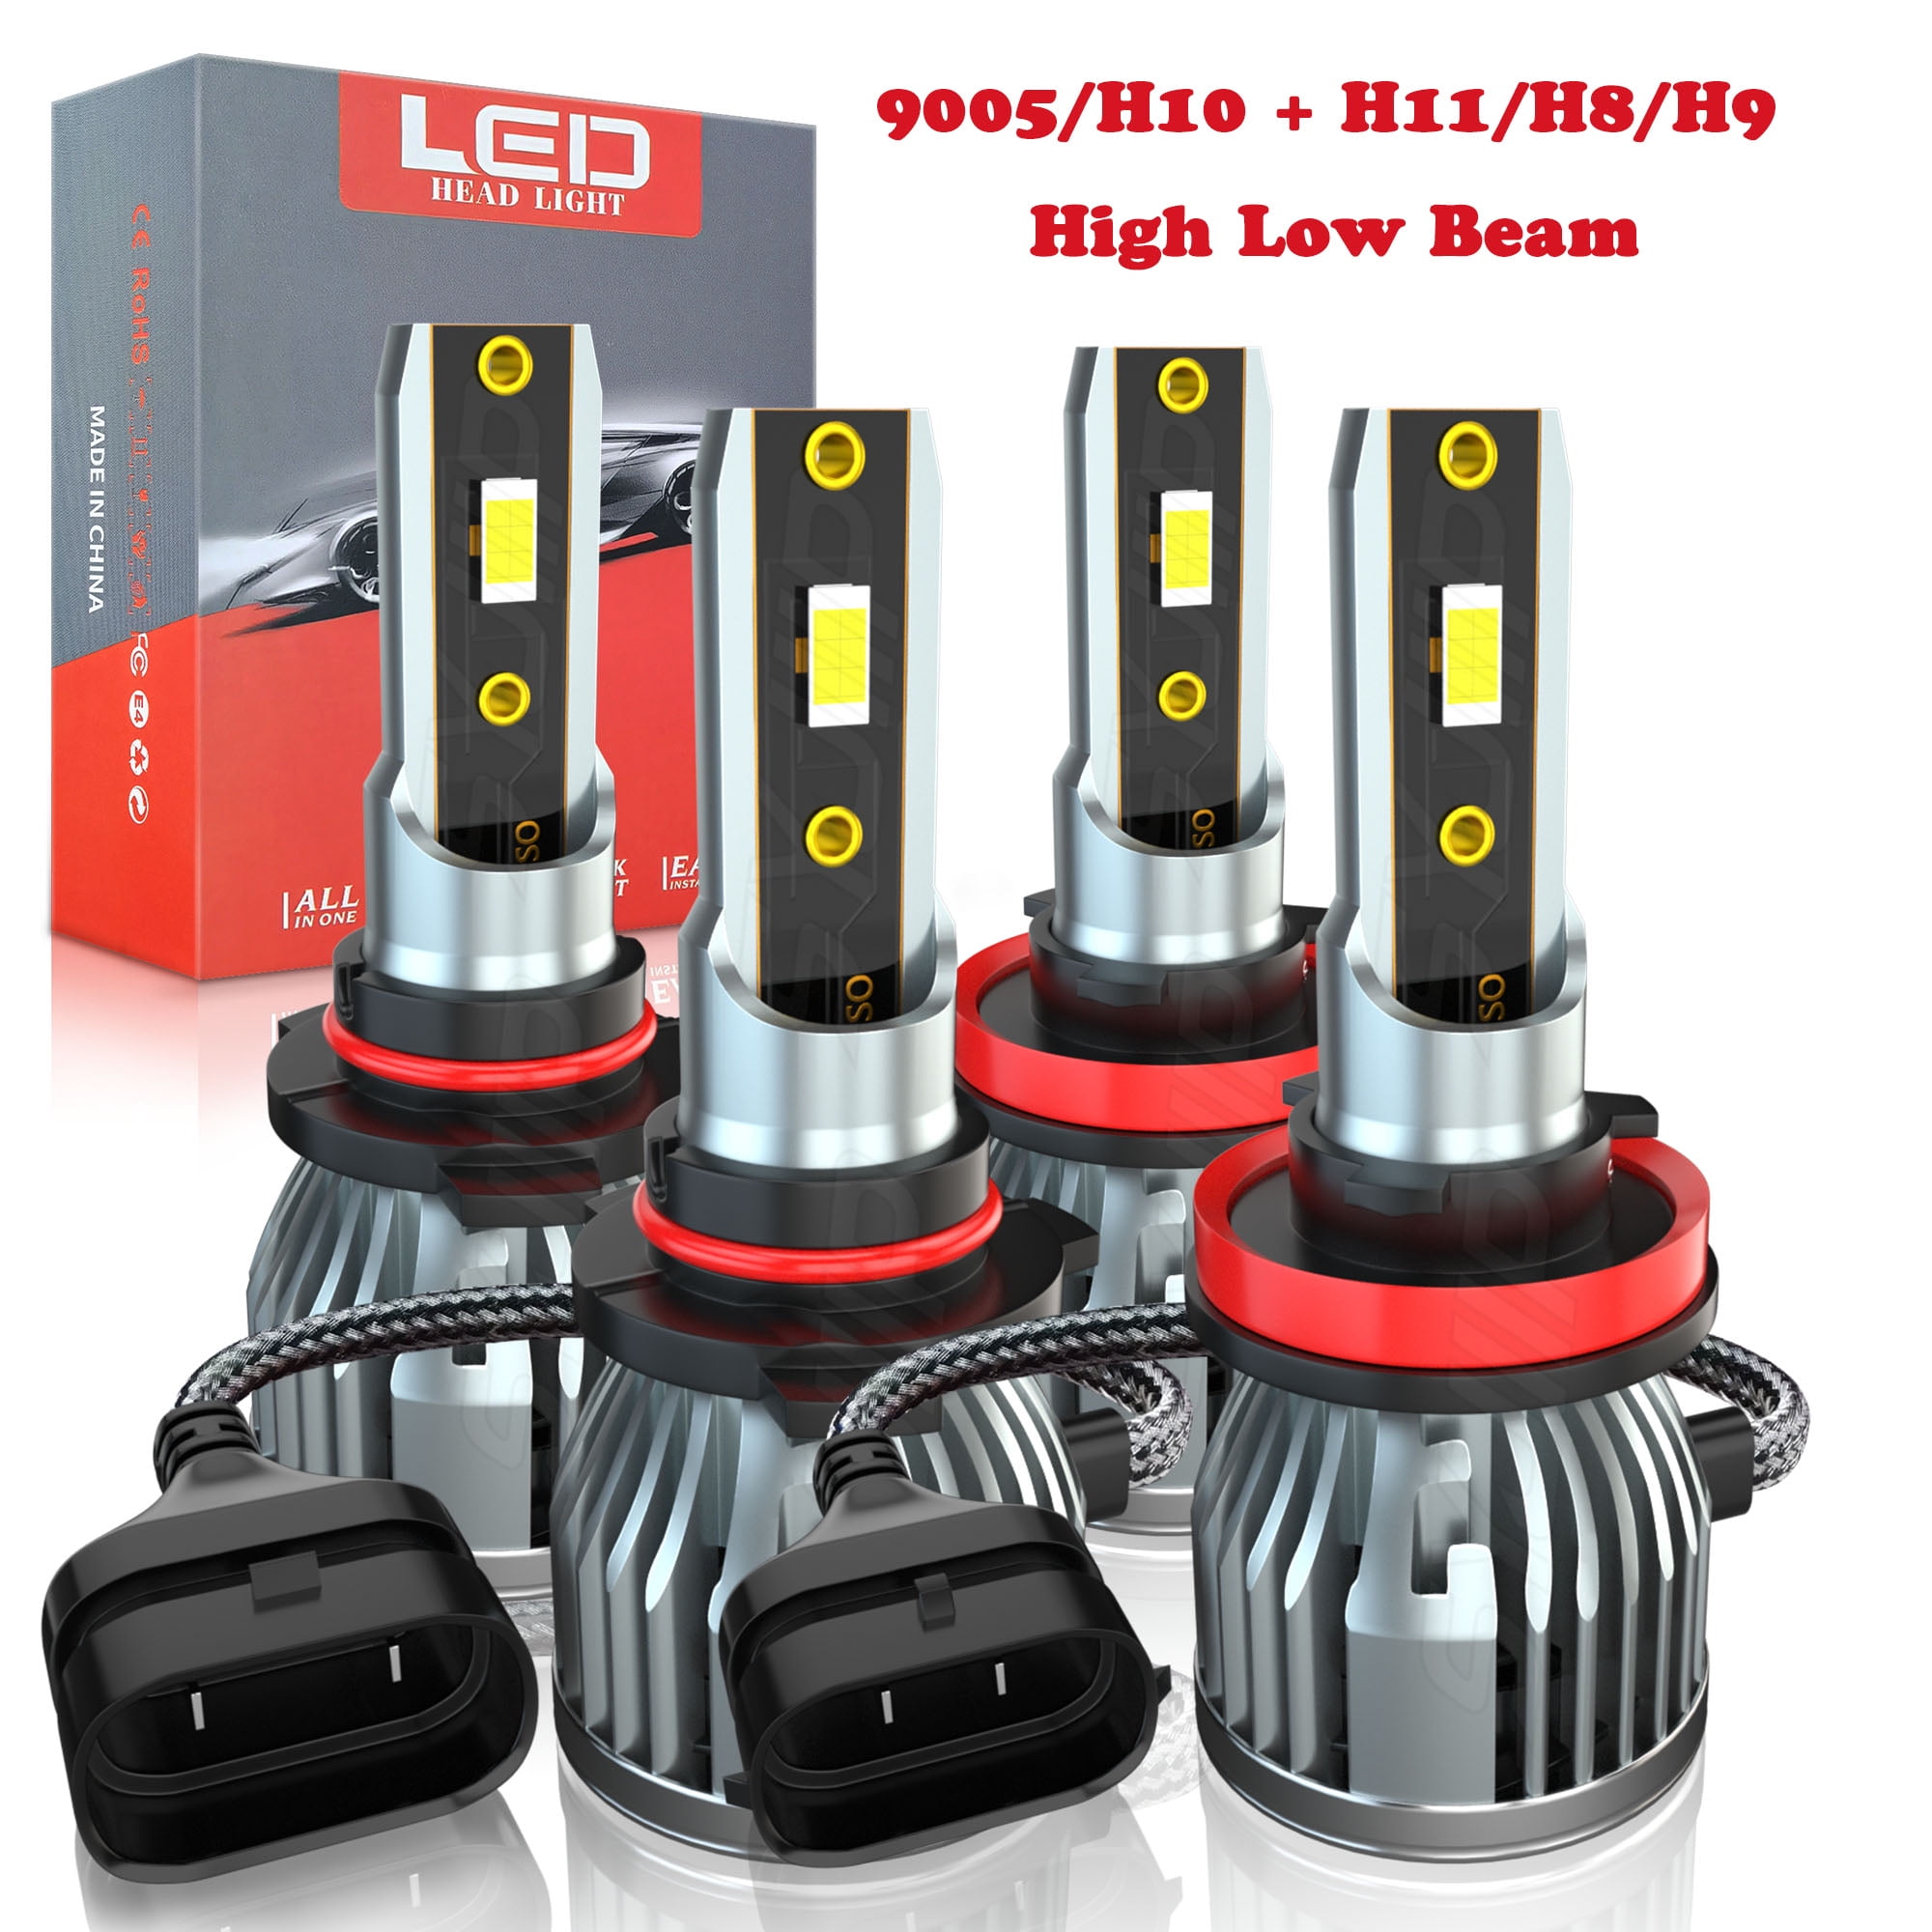 9005 H11 LED Headlight Bulbs 9005 High Beam H11 Low Beam Bulbs White 300%  Brighter 6000k-6500k Waterproof Plug&Play Led 9005/hb3+H11/H8/H9 High Low  Beam Kit 